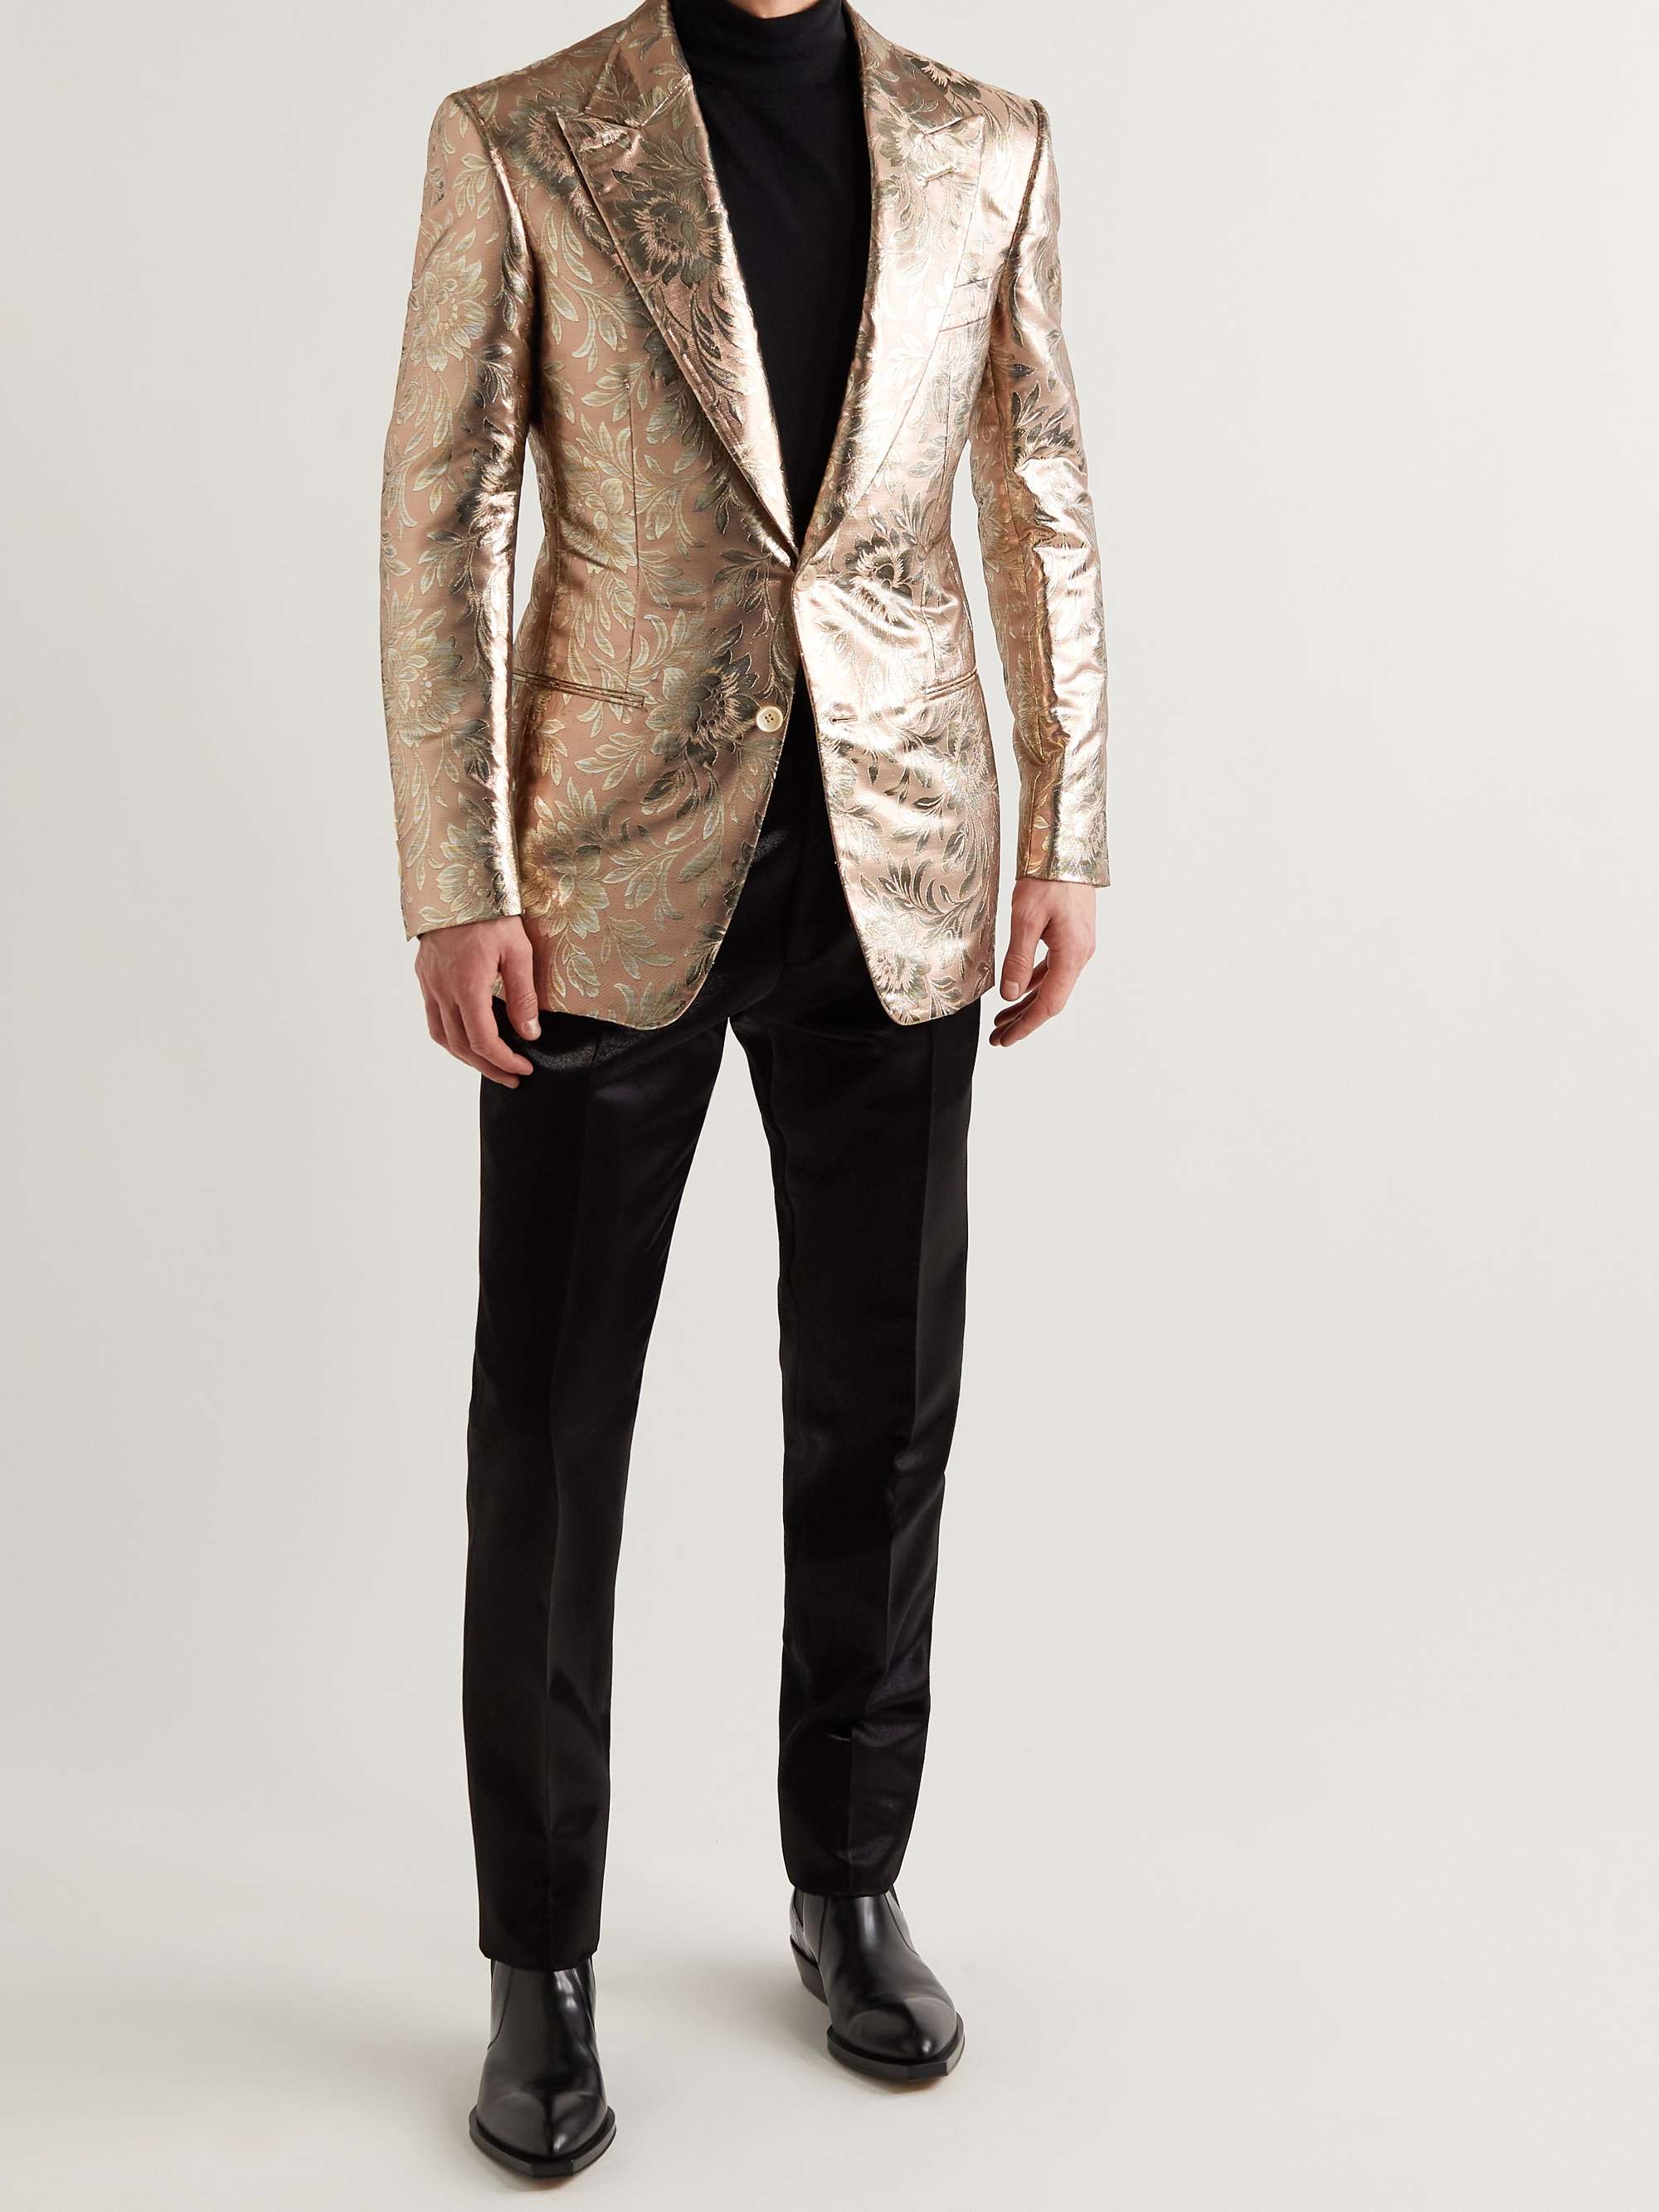 TOM FORD Spencer Slim-Fit Metallic Jacquard Tuxedo Jacket